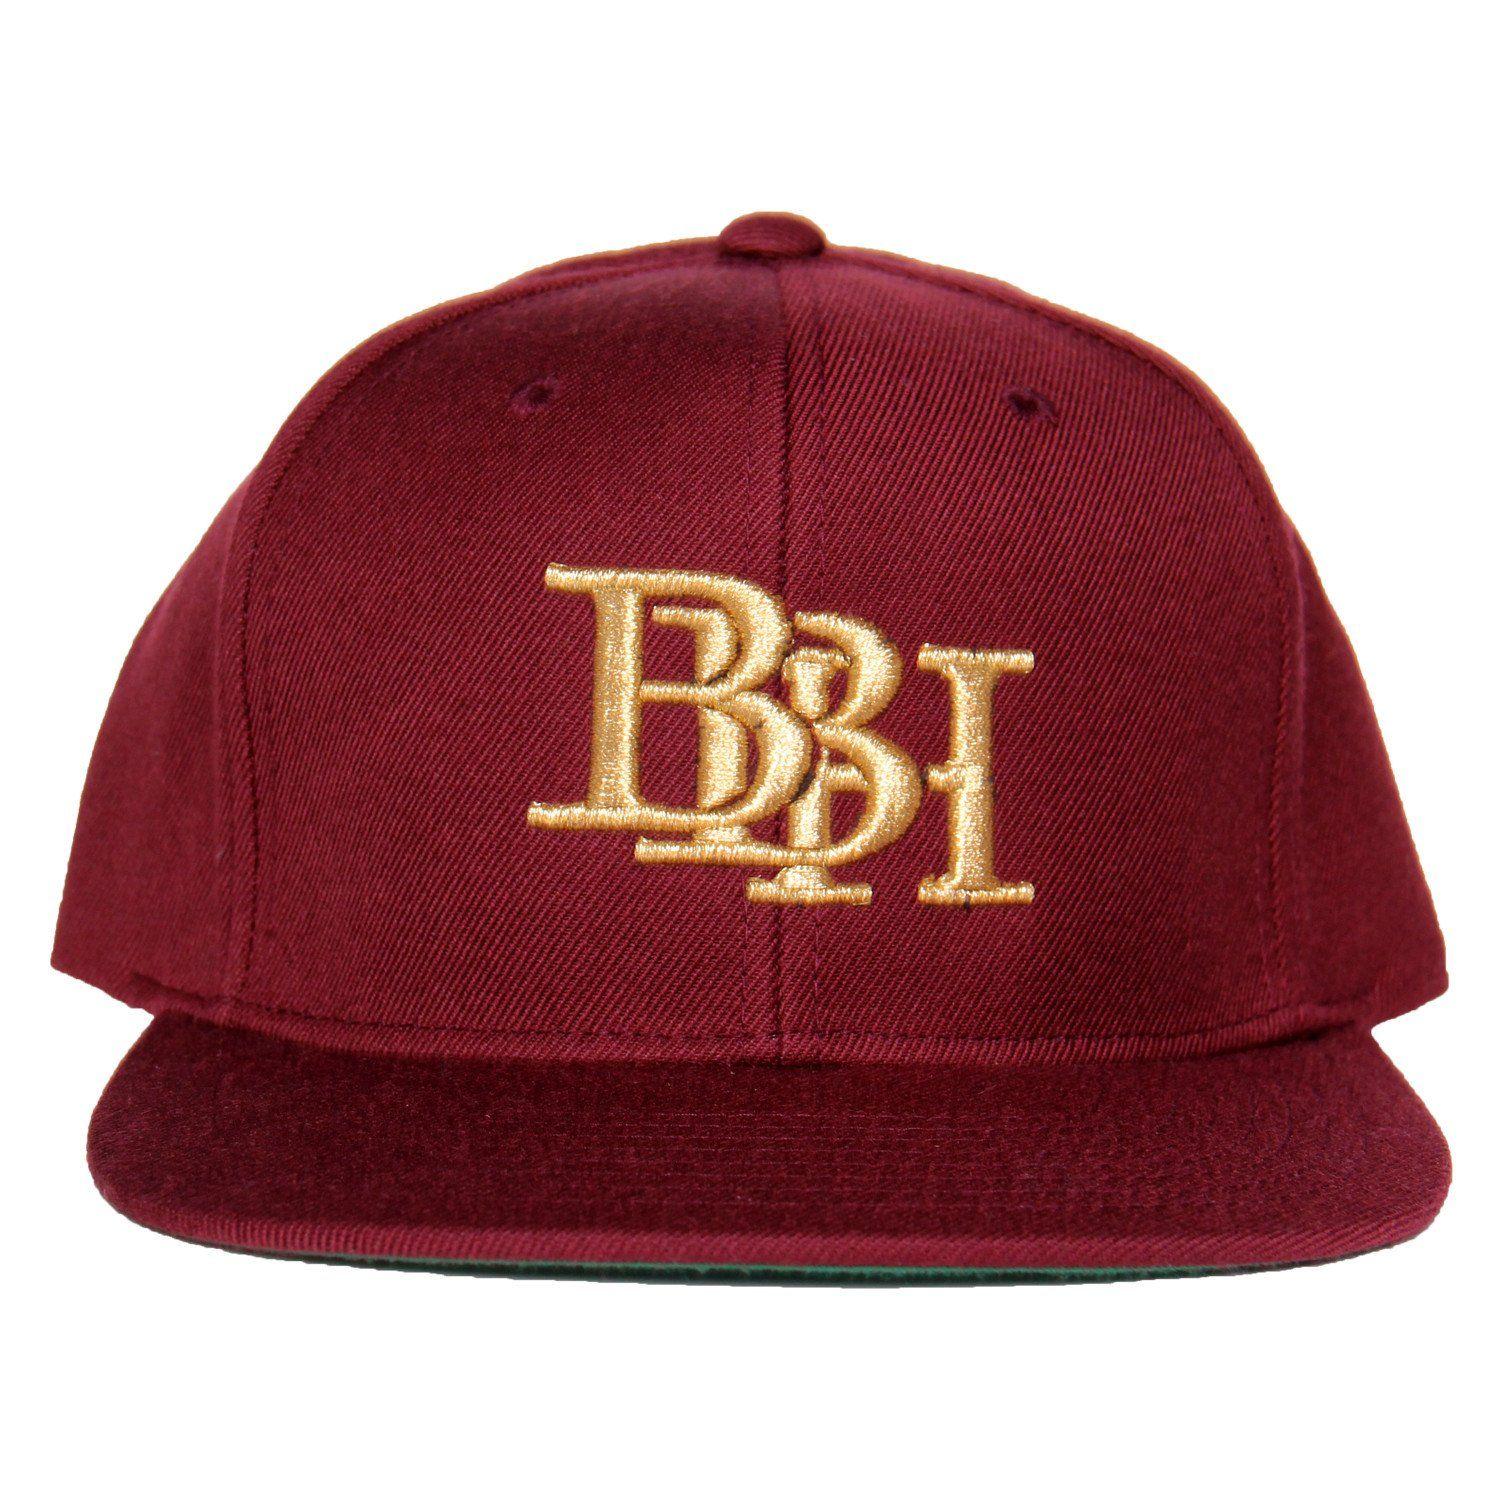 BBH Logo - BBH LOGO BURGUNDY